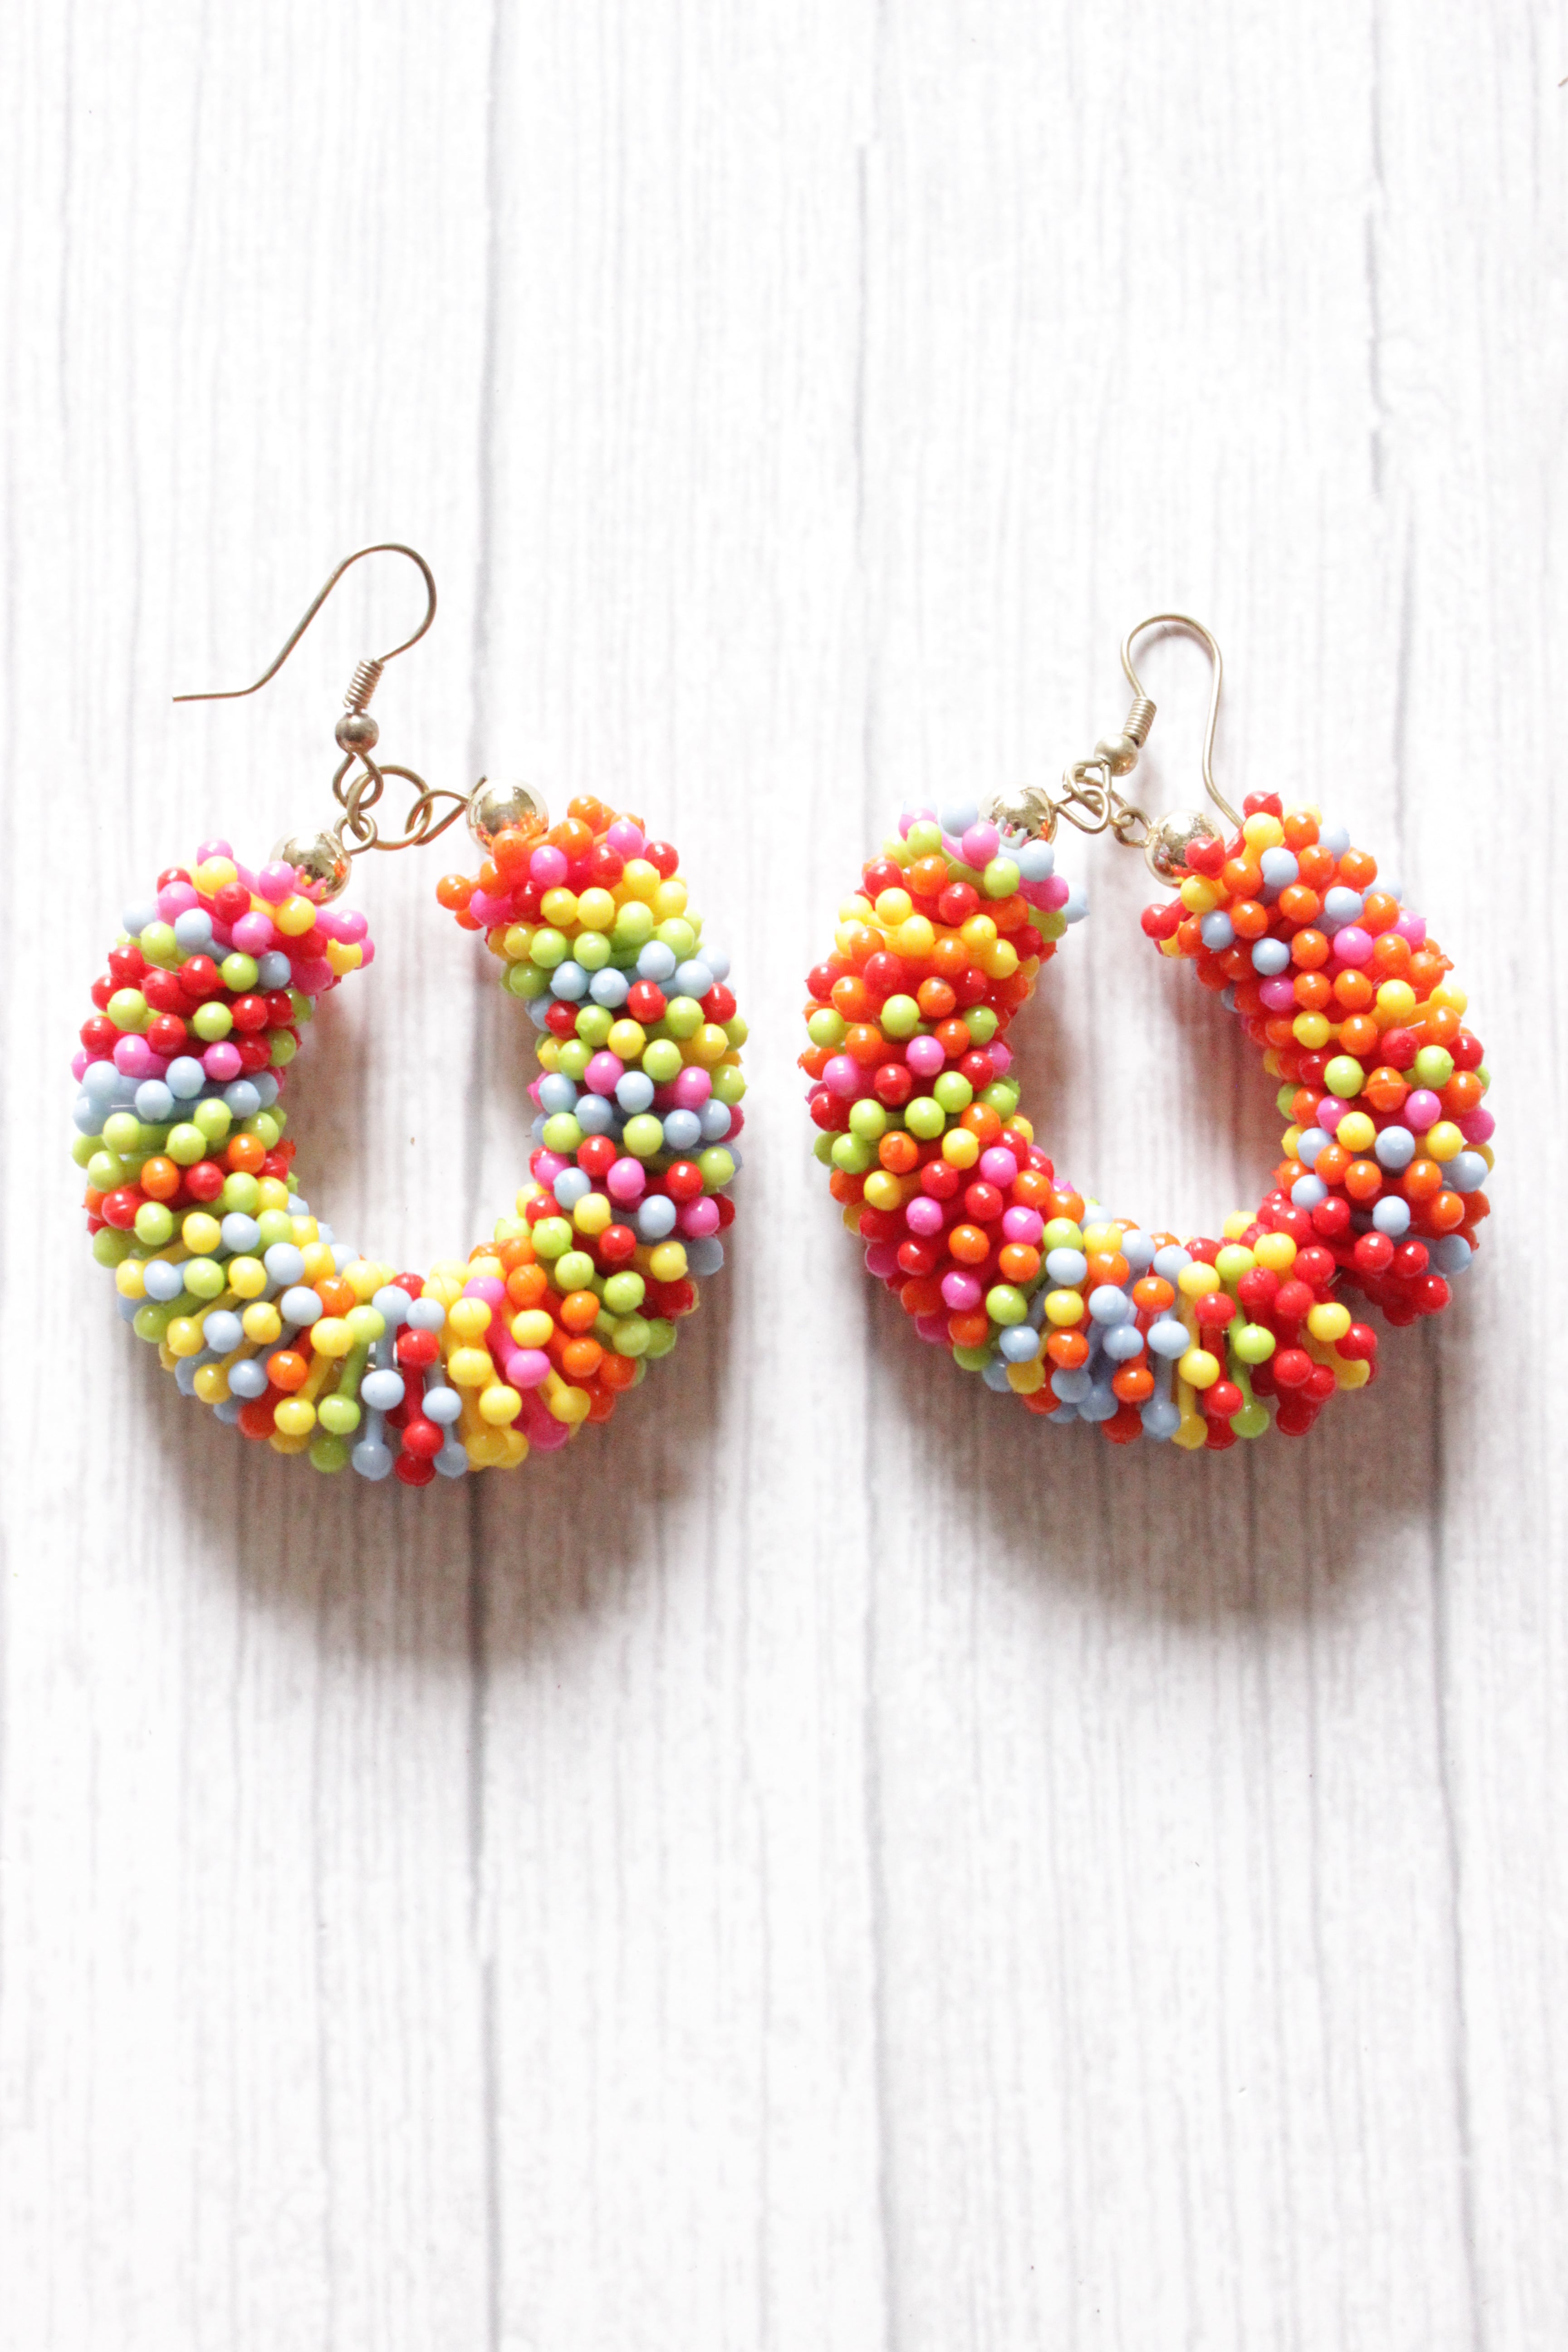 Boho Multicolor Beads Hoop Earrings For Women Girls Bohemian Summer Braided  Floral Beaded Earrings Earrings Gold Circle Jewelry - AliExpress